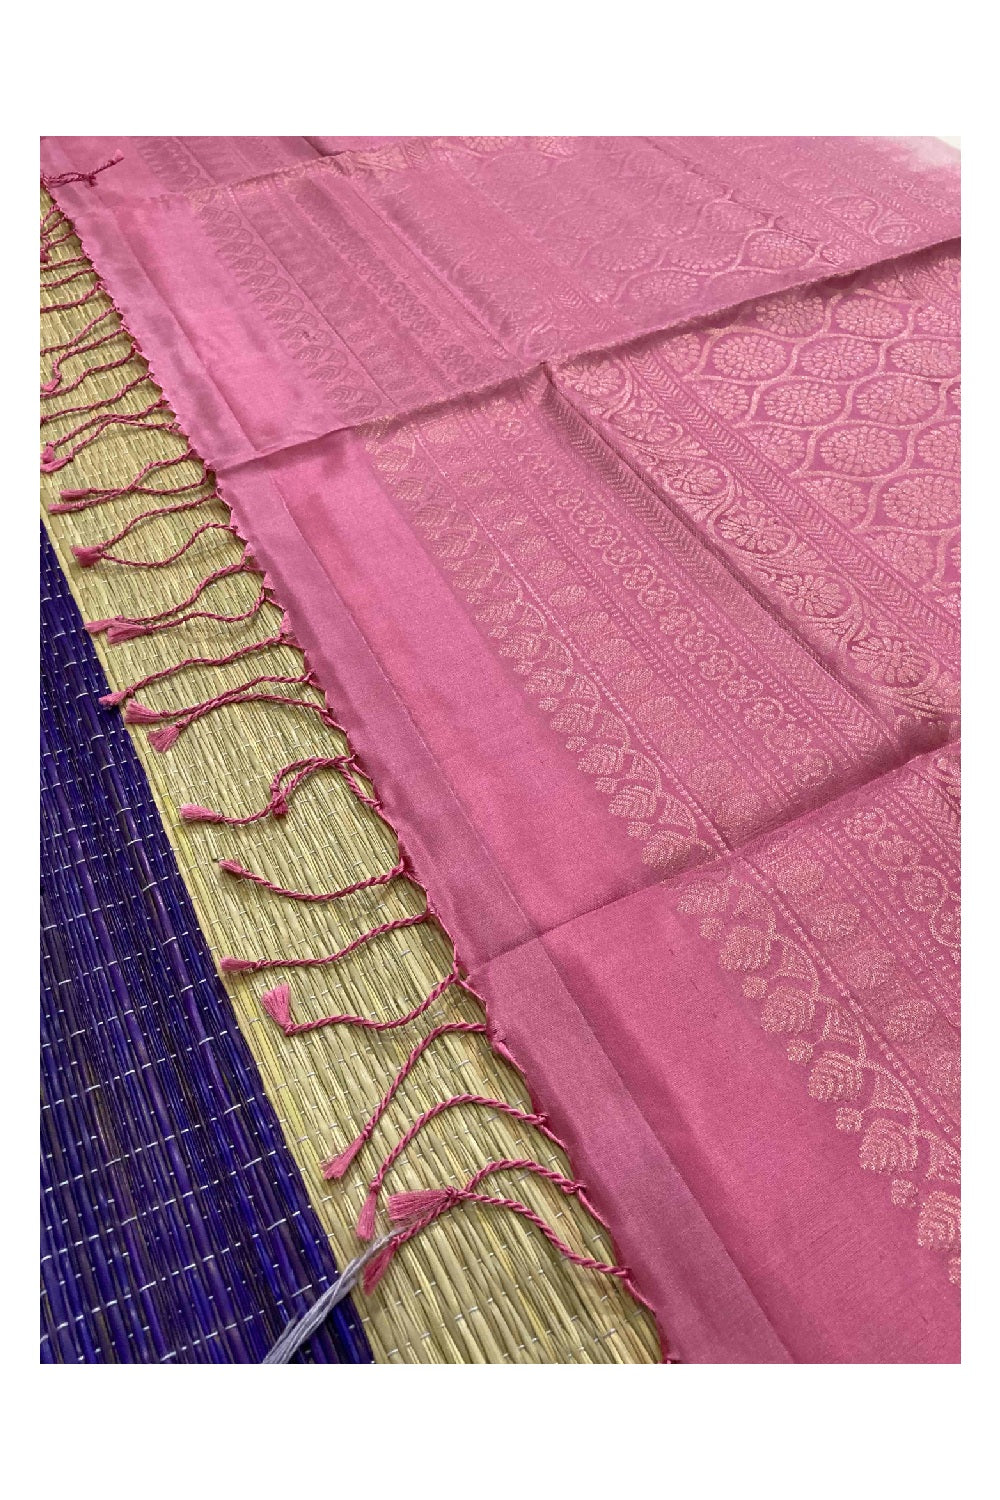 Southloom Handloom Pure Silk Kanchipuram Saree in Pink Stripes on Beige Body